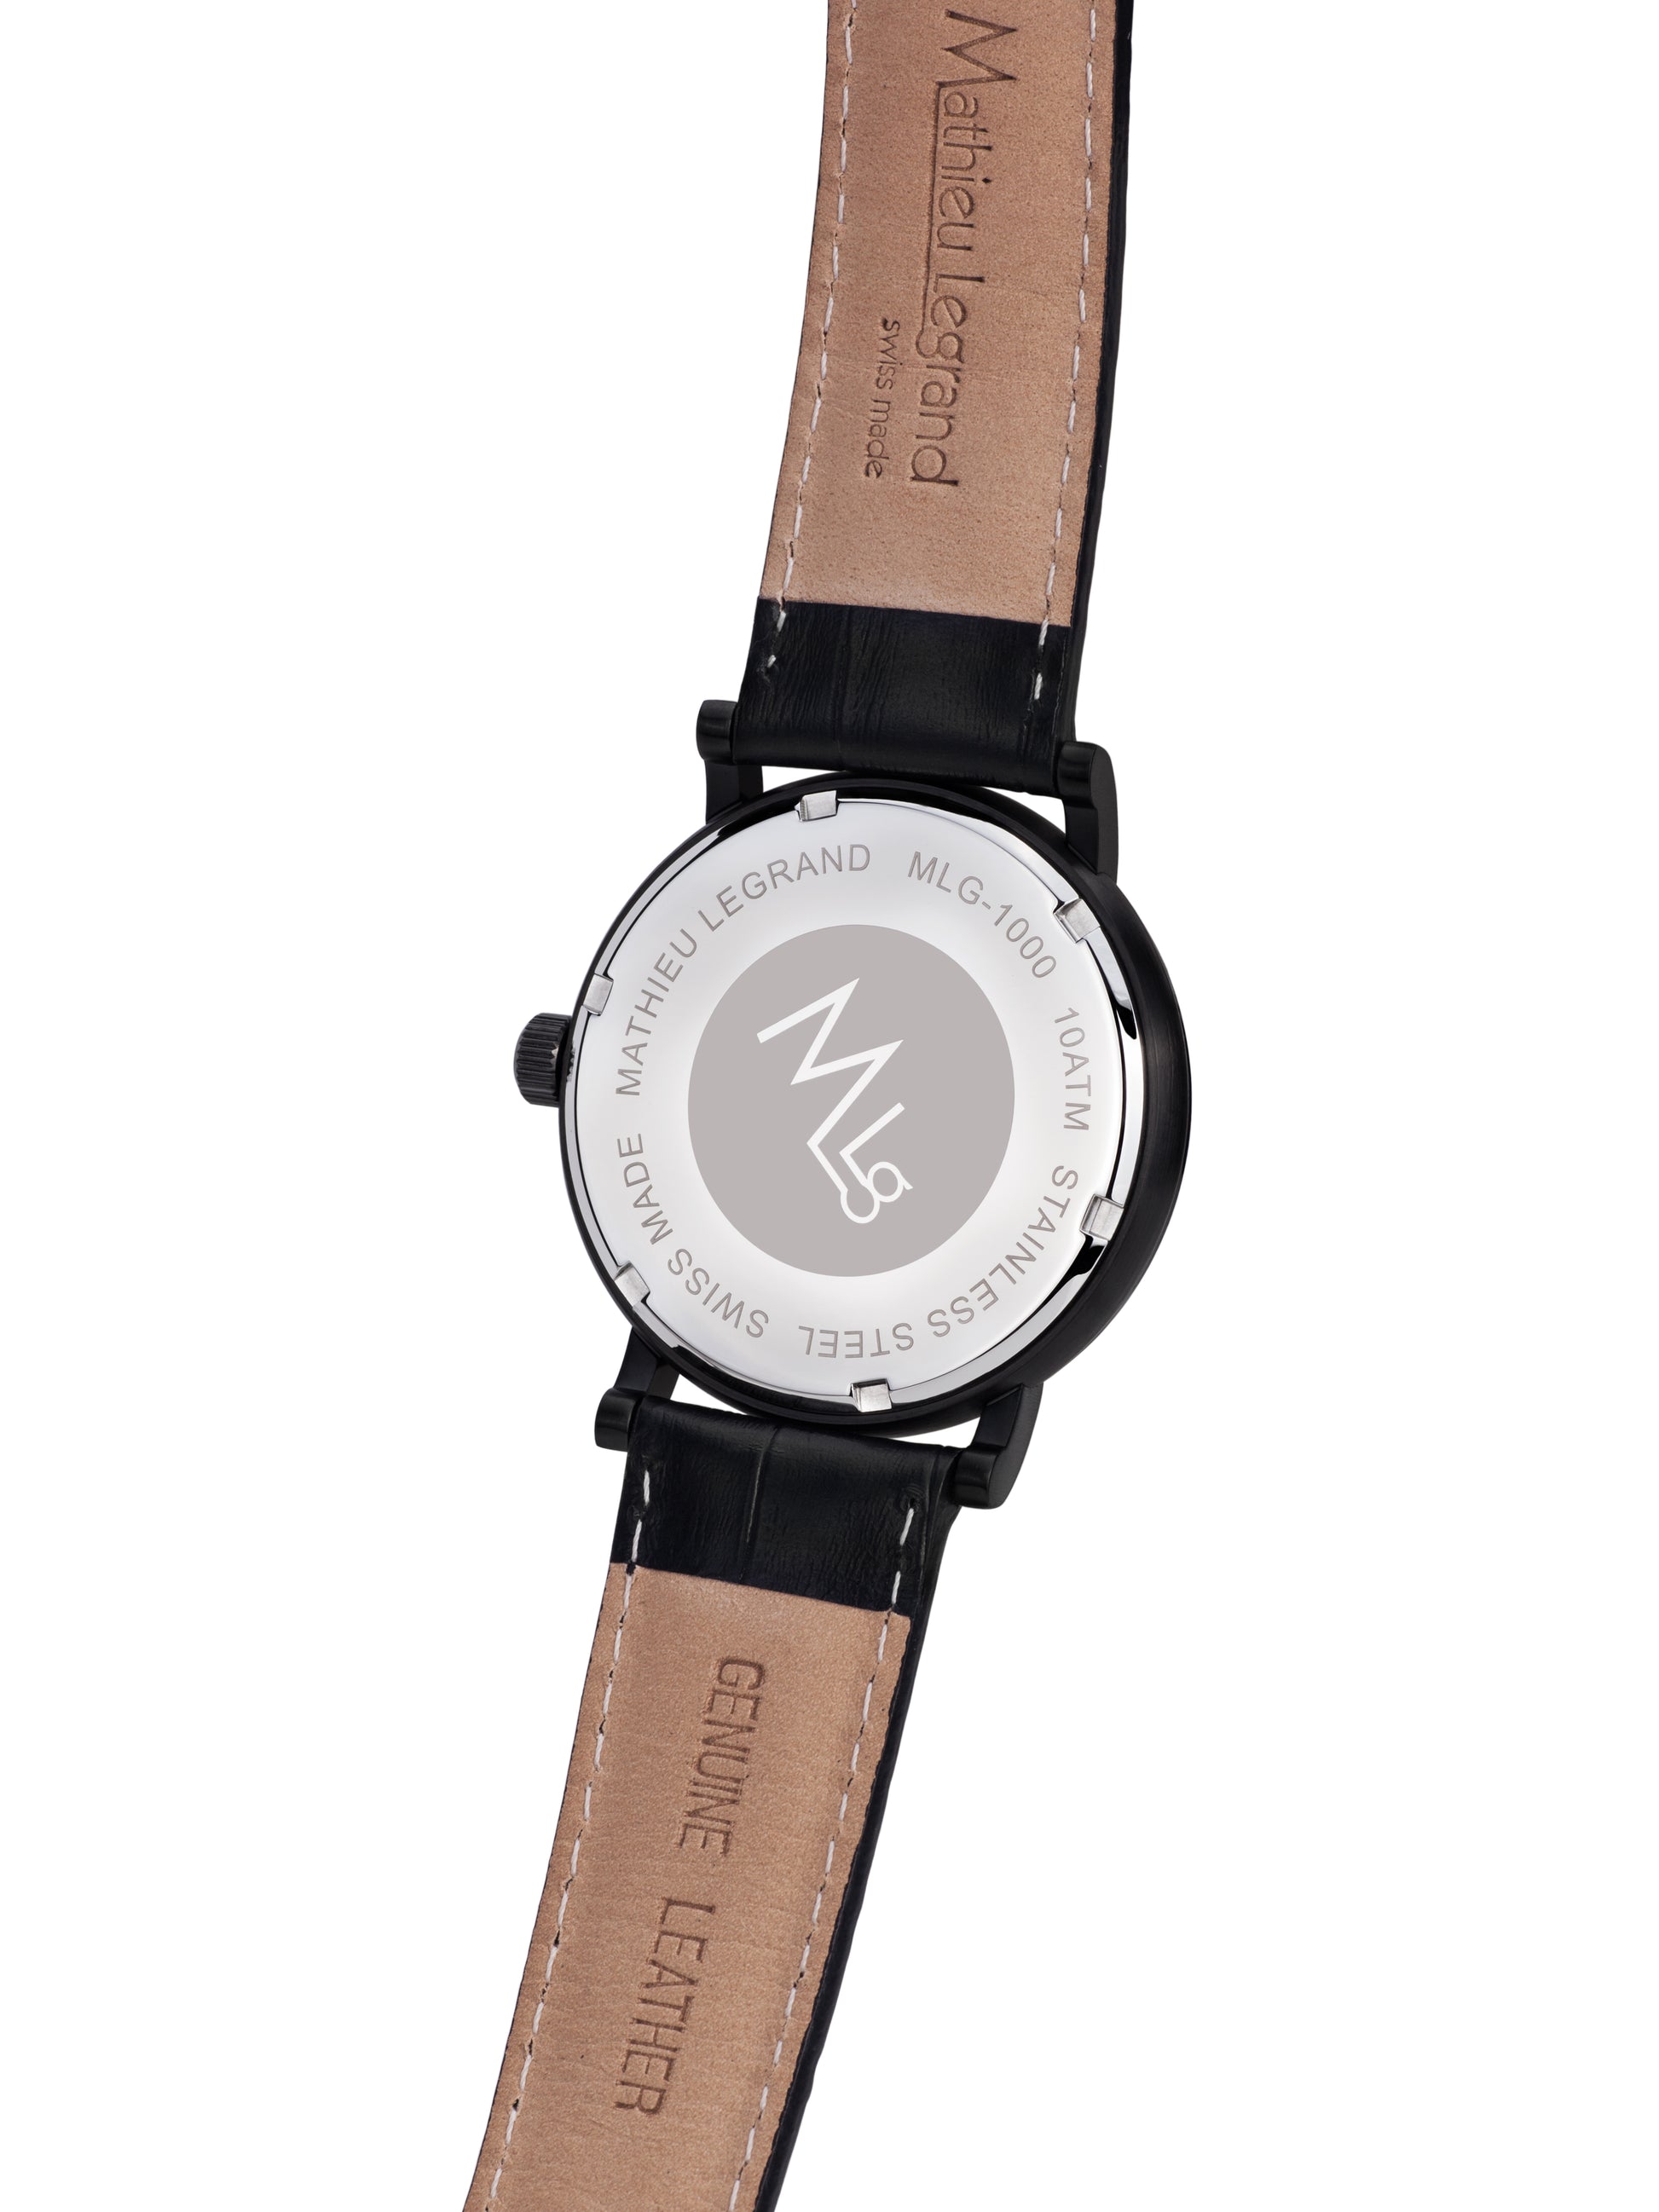 Automatic watches — Classique — Mathieu Legrand — black IP silver leather